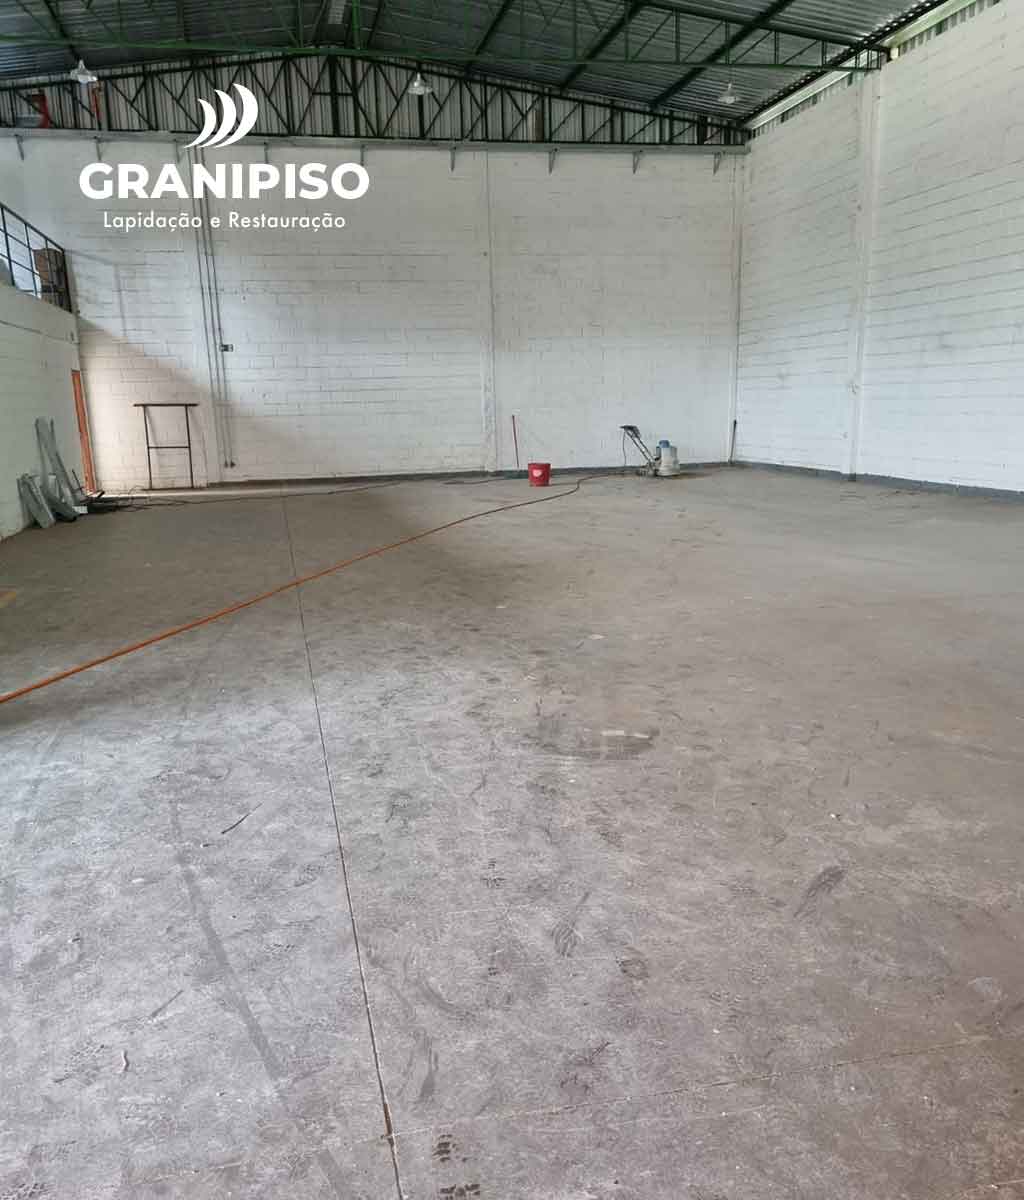 lapidacao-piso-industrial-galpao-granipiso-01